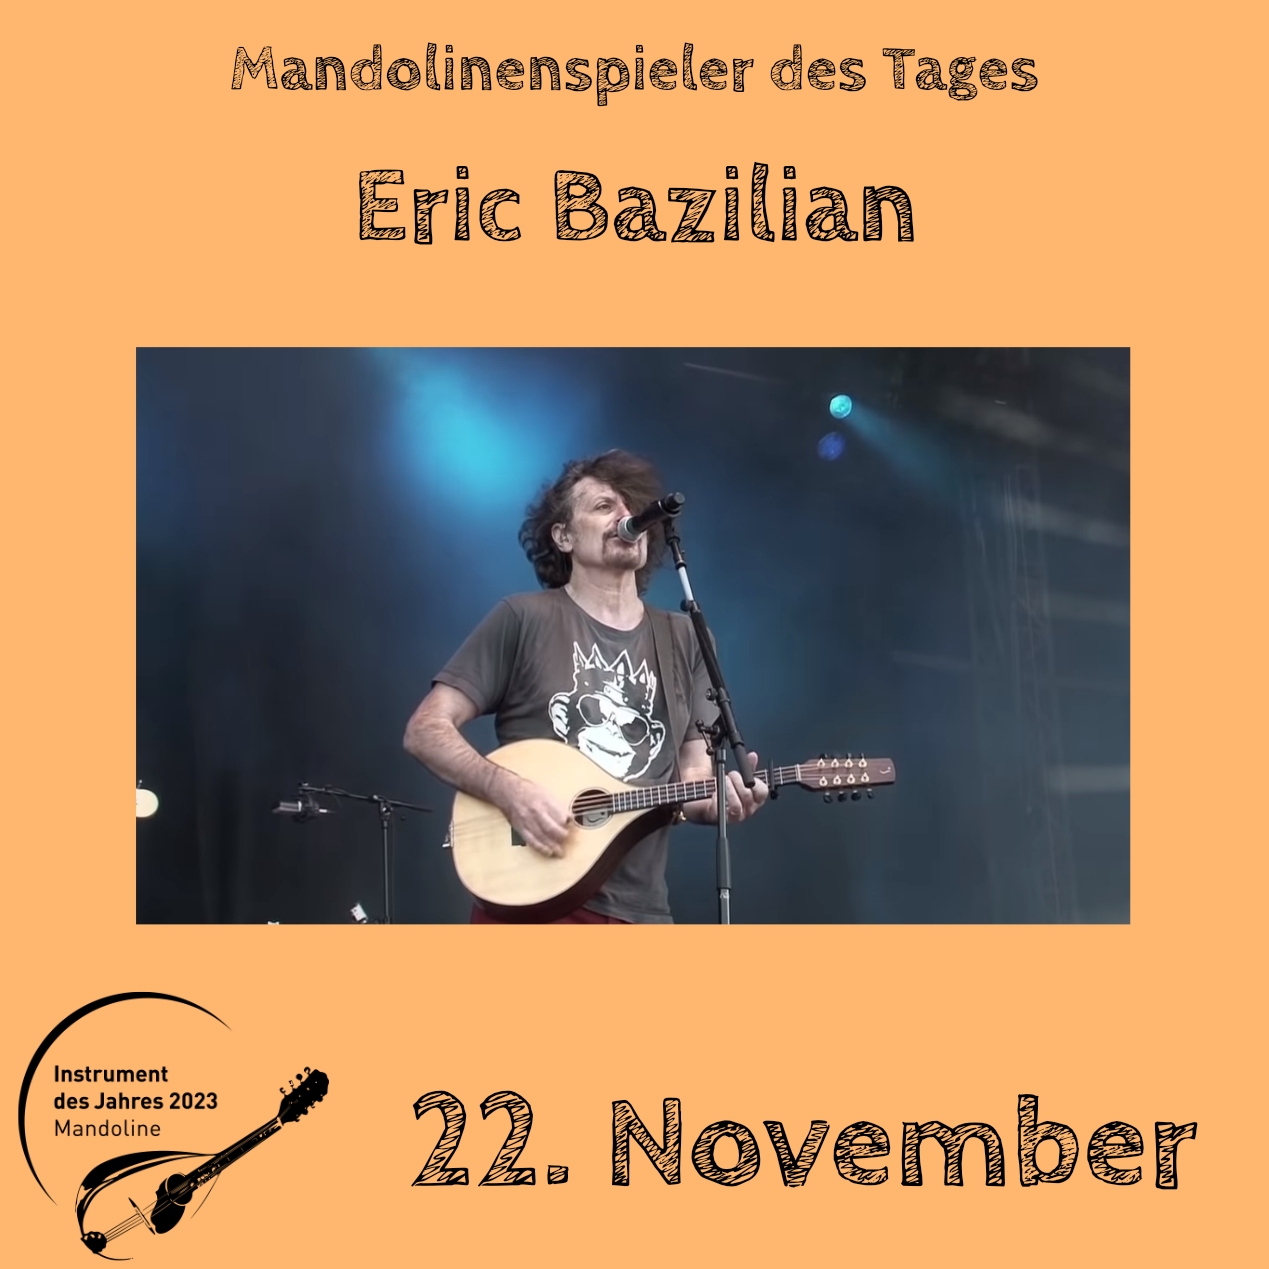 22. November - Eric Bazilian Instrument des Jahres 2023 Mandolinenspieler Mandolinenspielerin des Tages